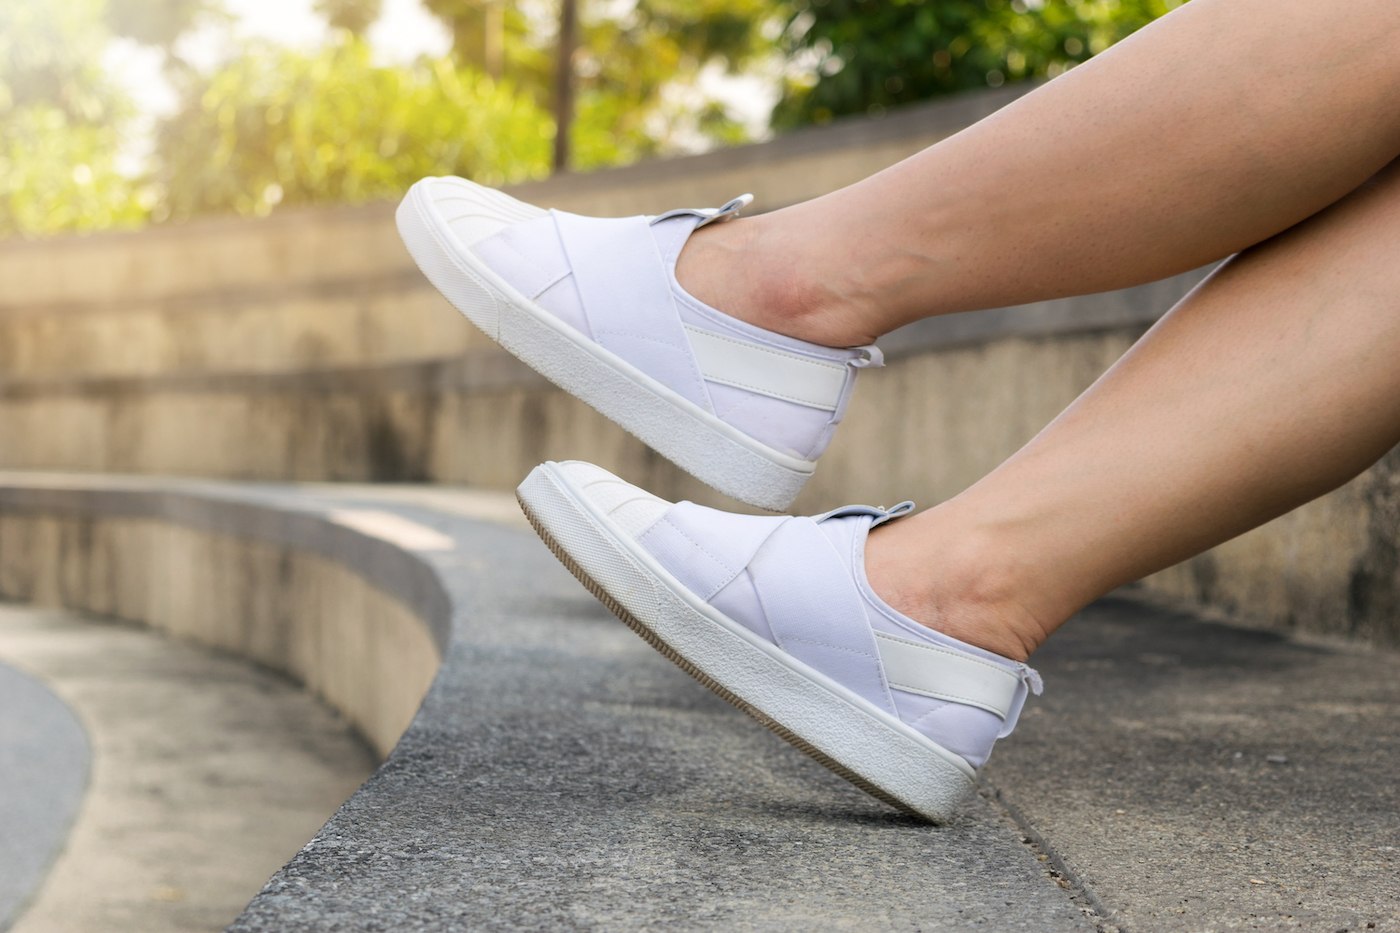 white slip on gym shoes